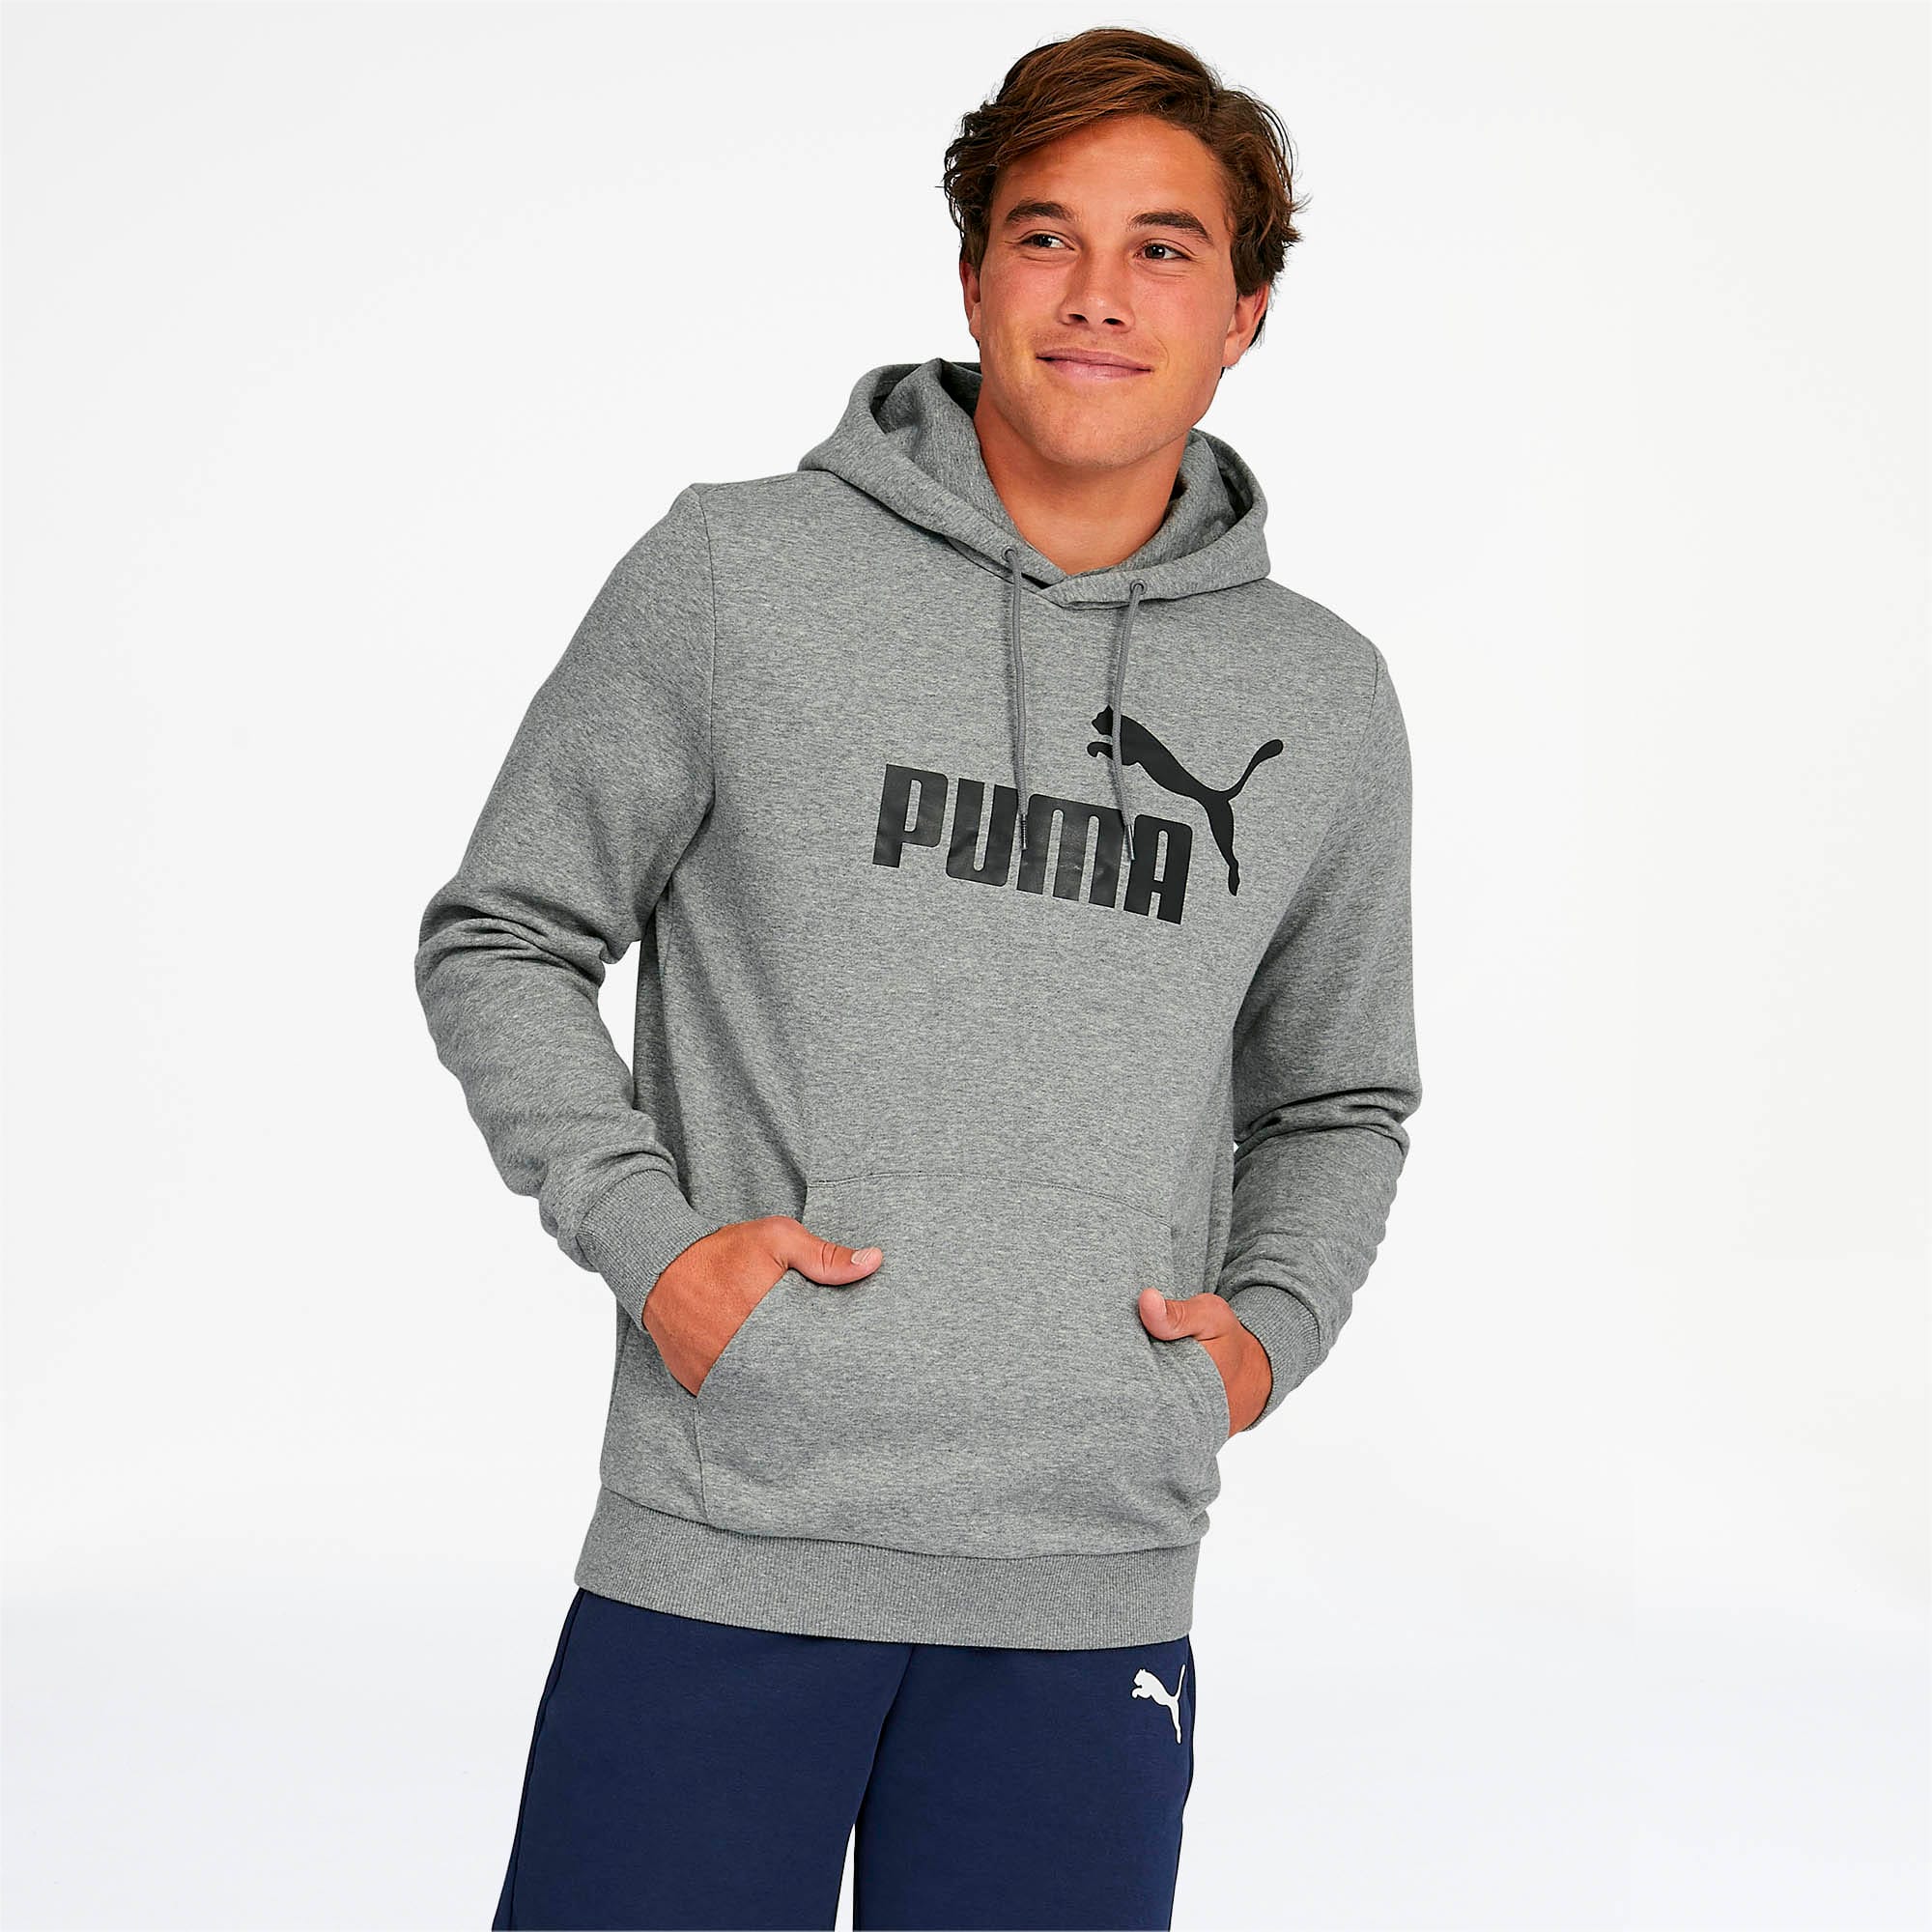 puma fleece sweatshirt